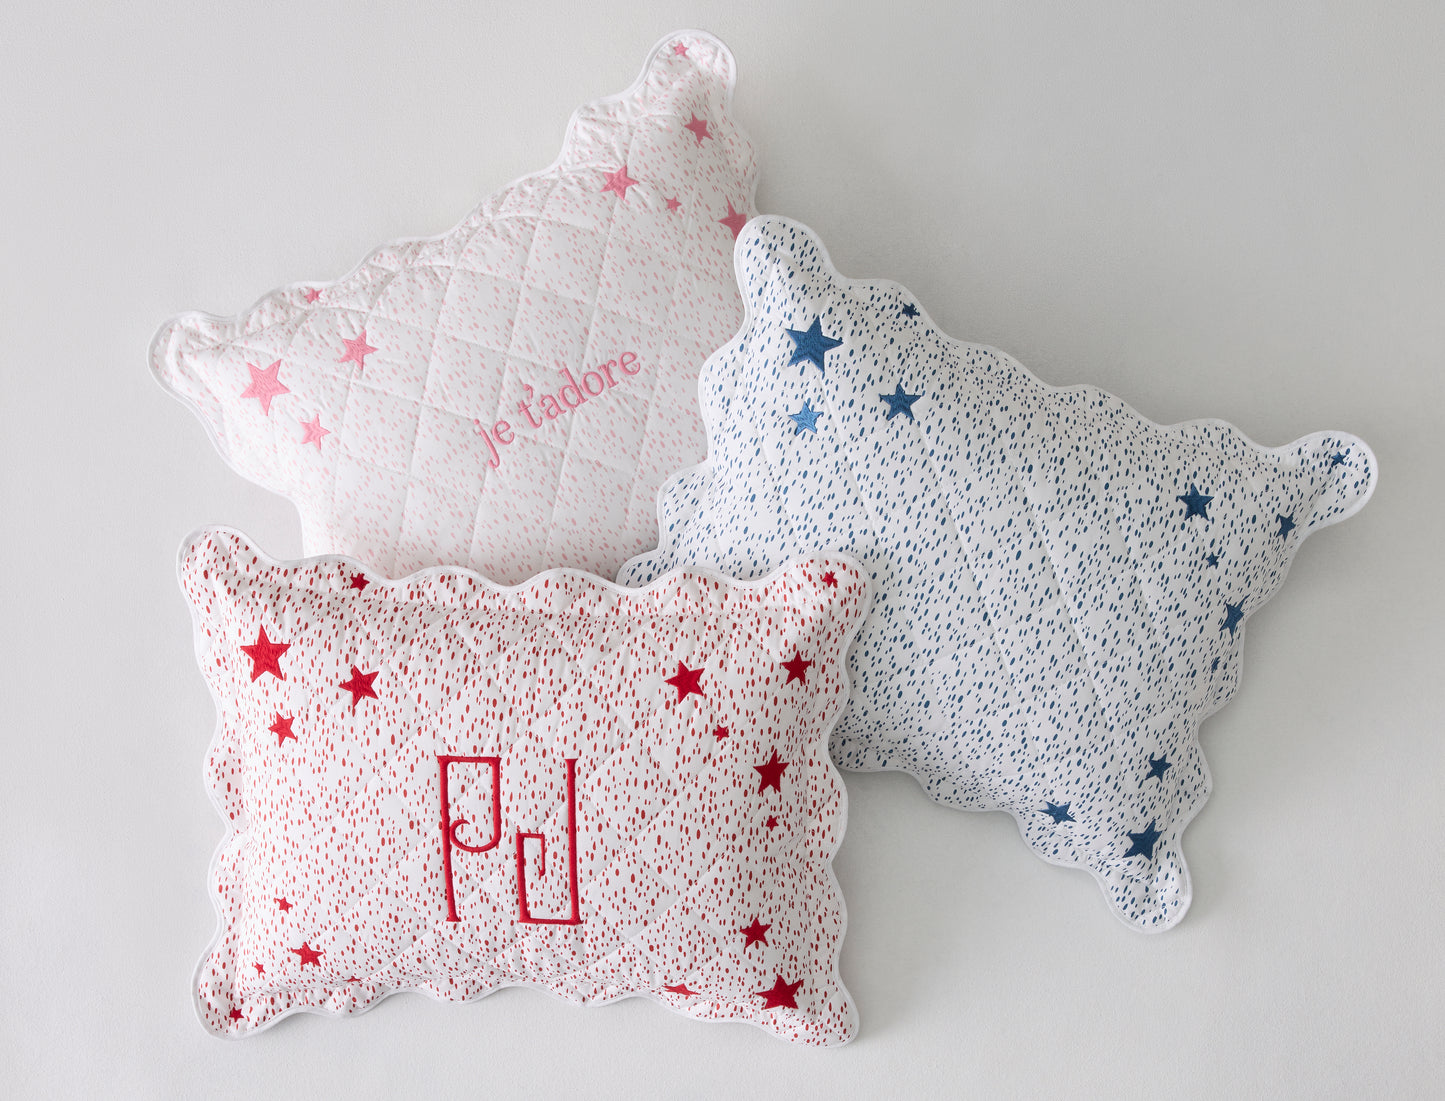 Matouk Mini Pillow Collection